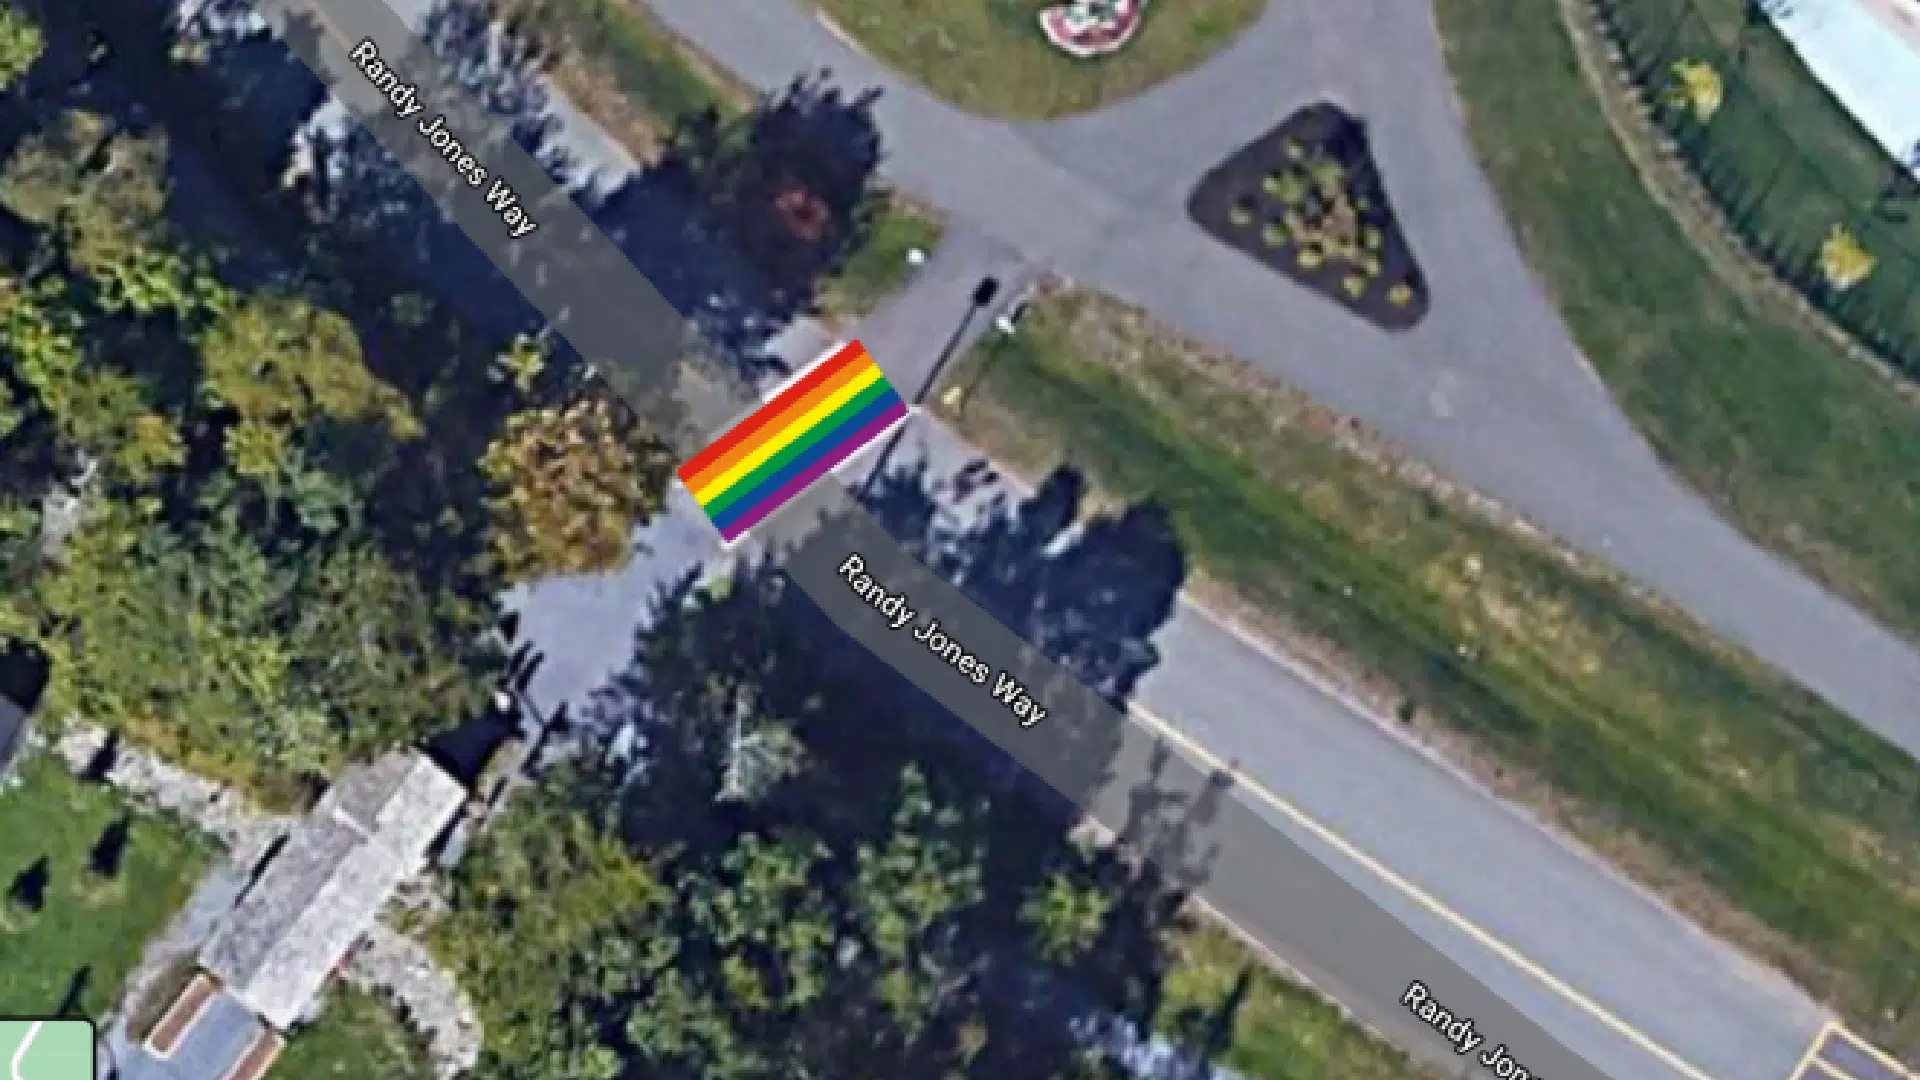 Quispamsis To Install Permanent Rainbow Crosswalk